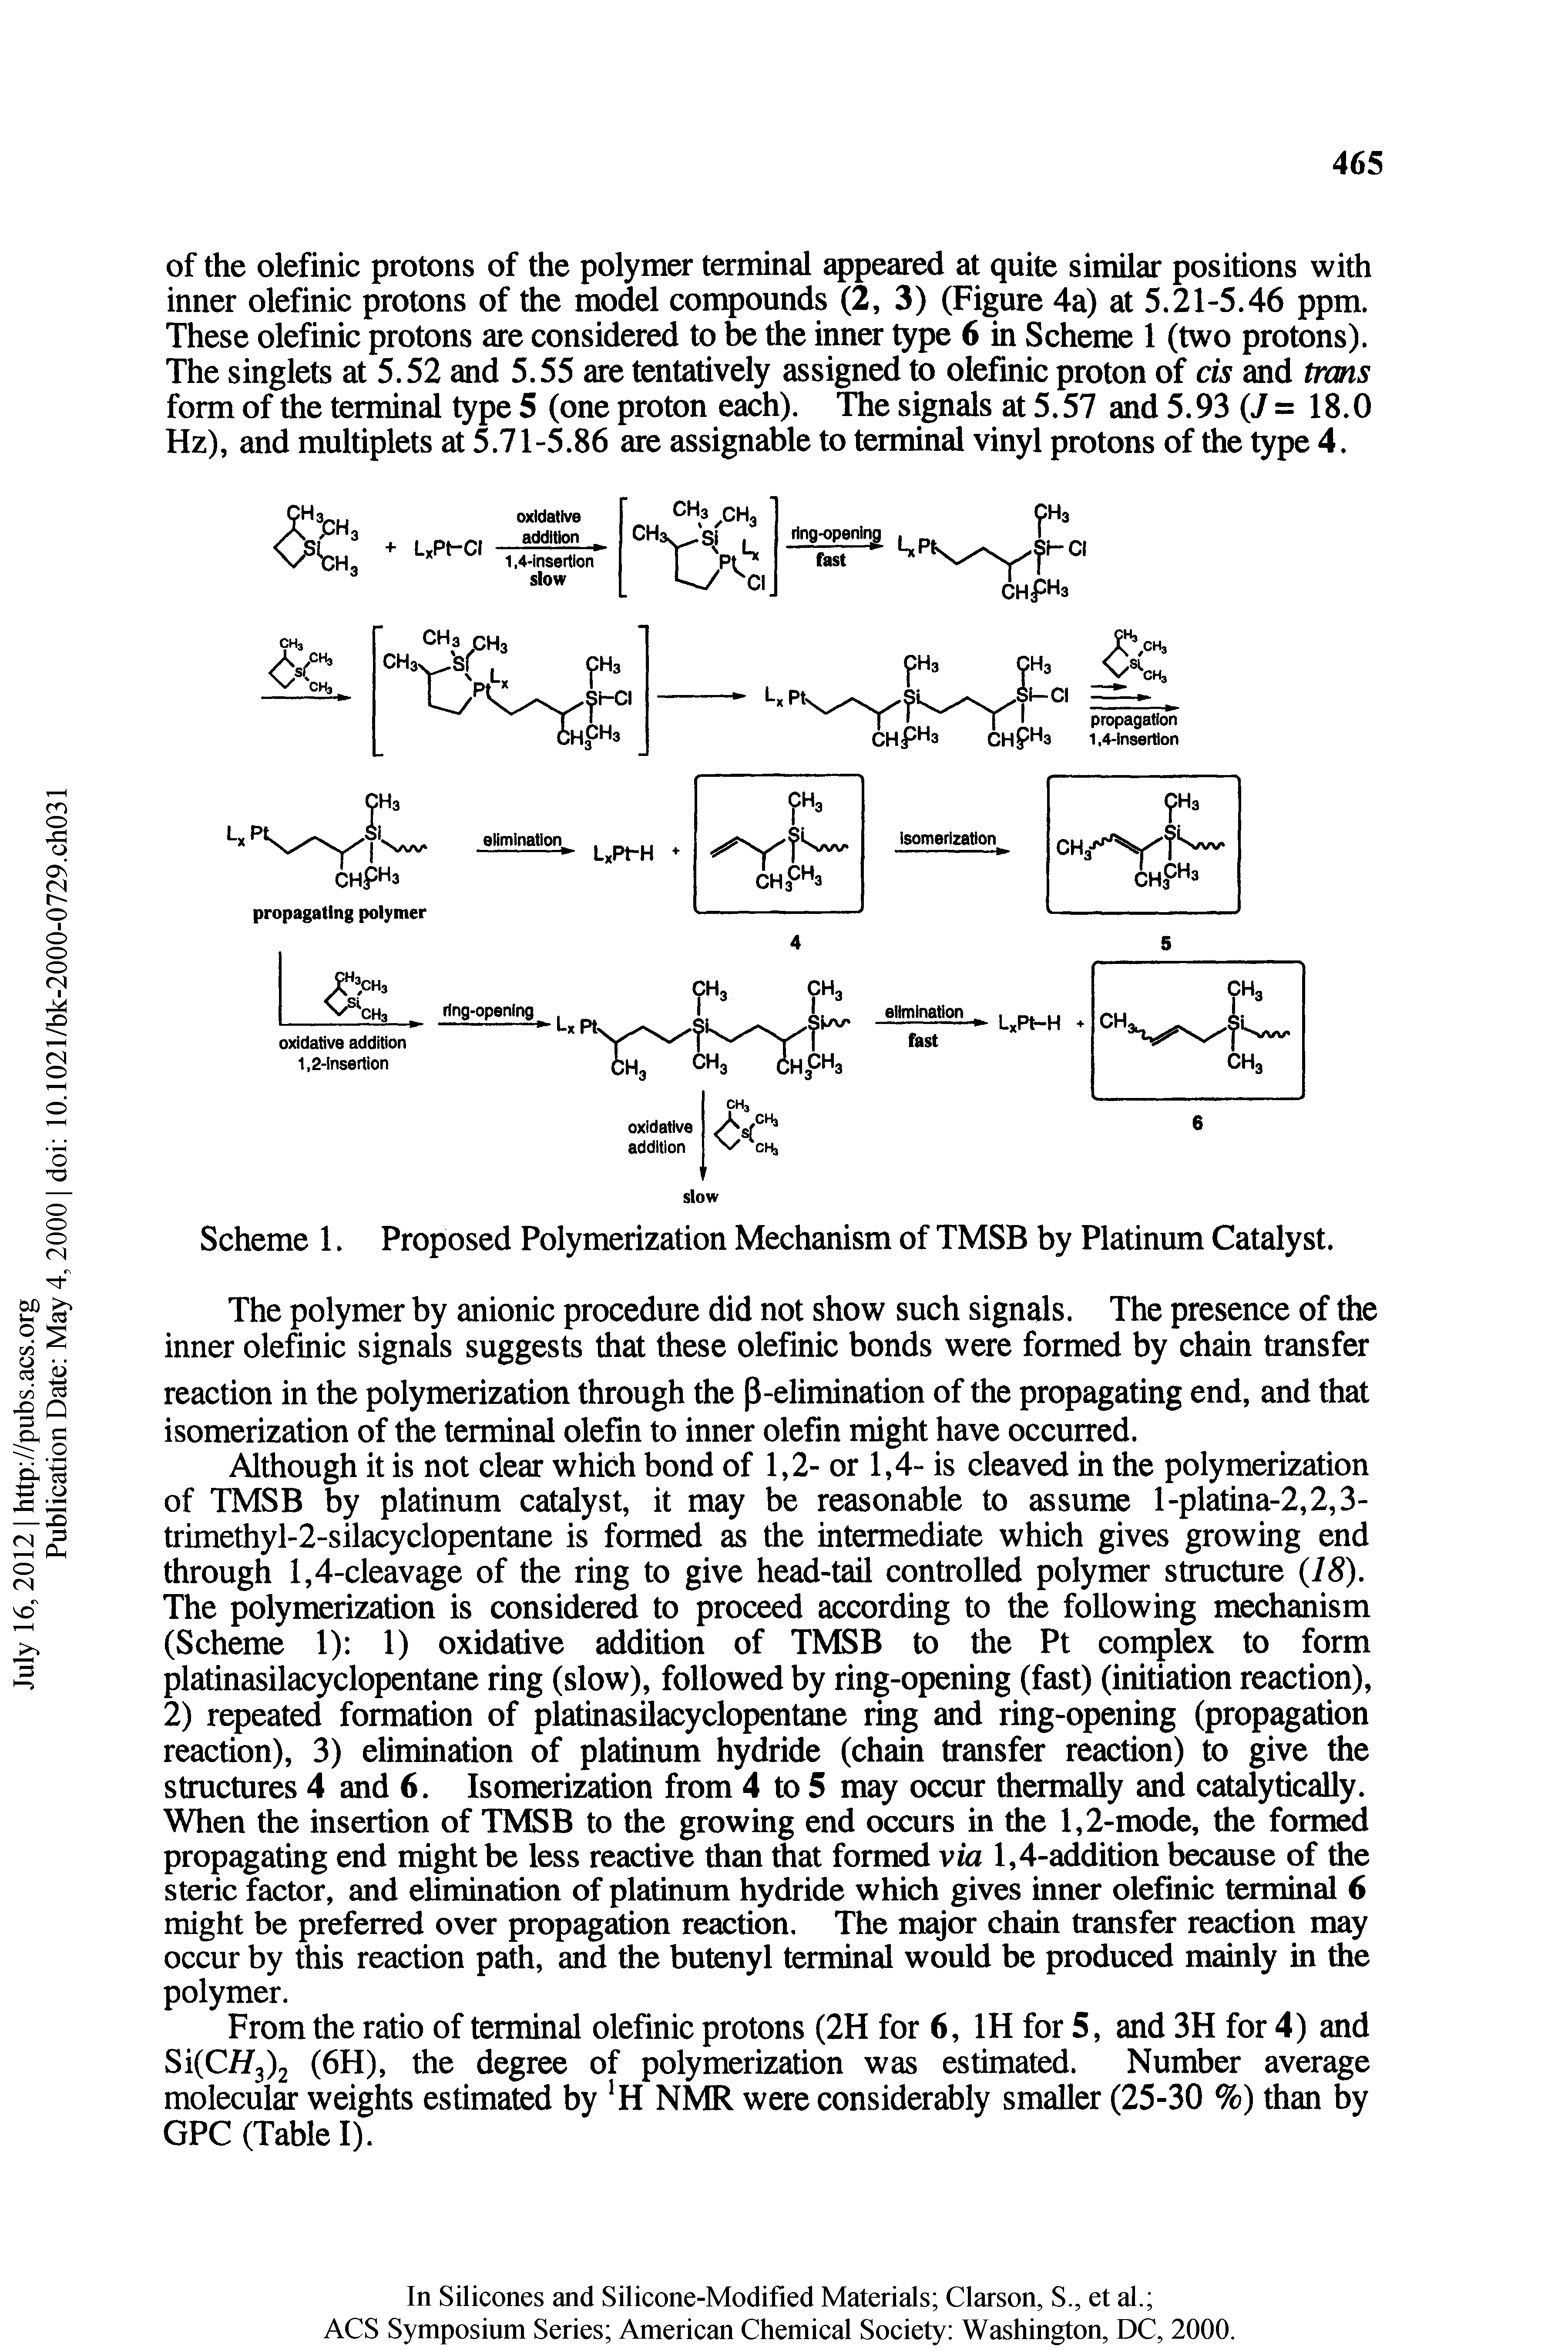 Scheme 1. Proposed Polymerization Mechanism of TMSB by Platinum Catalyst.